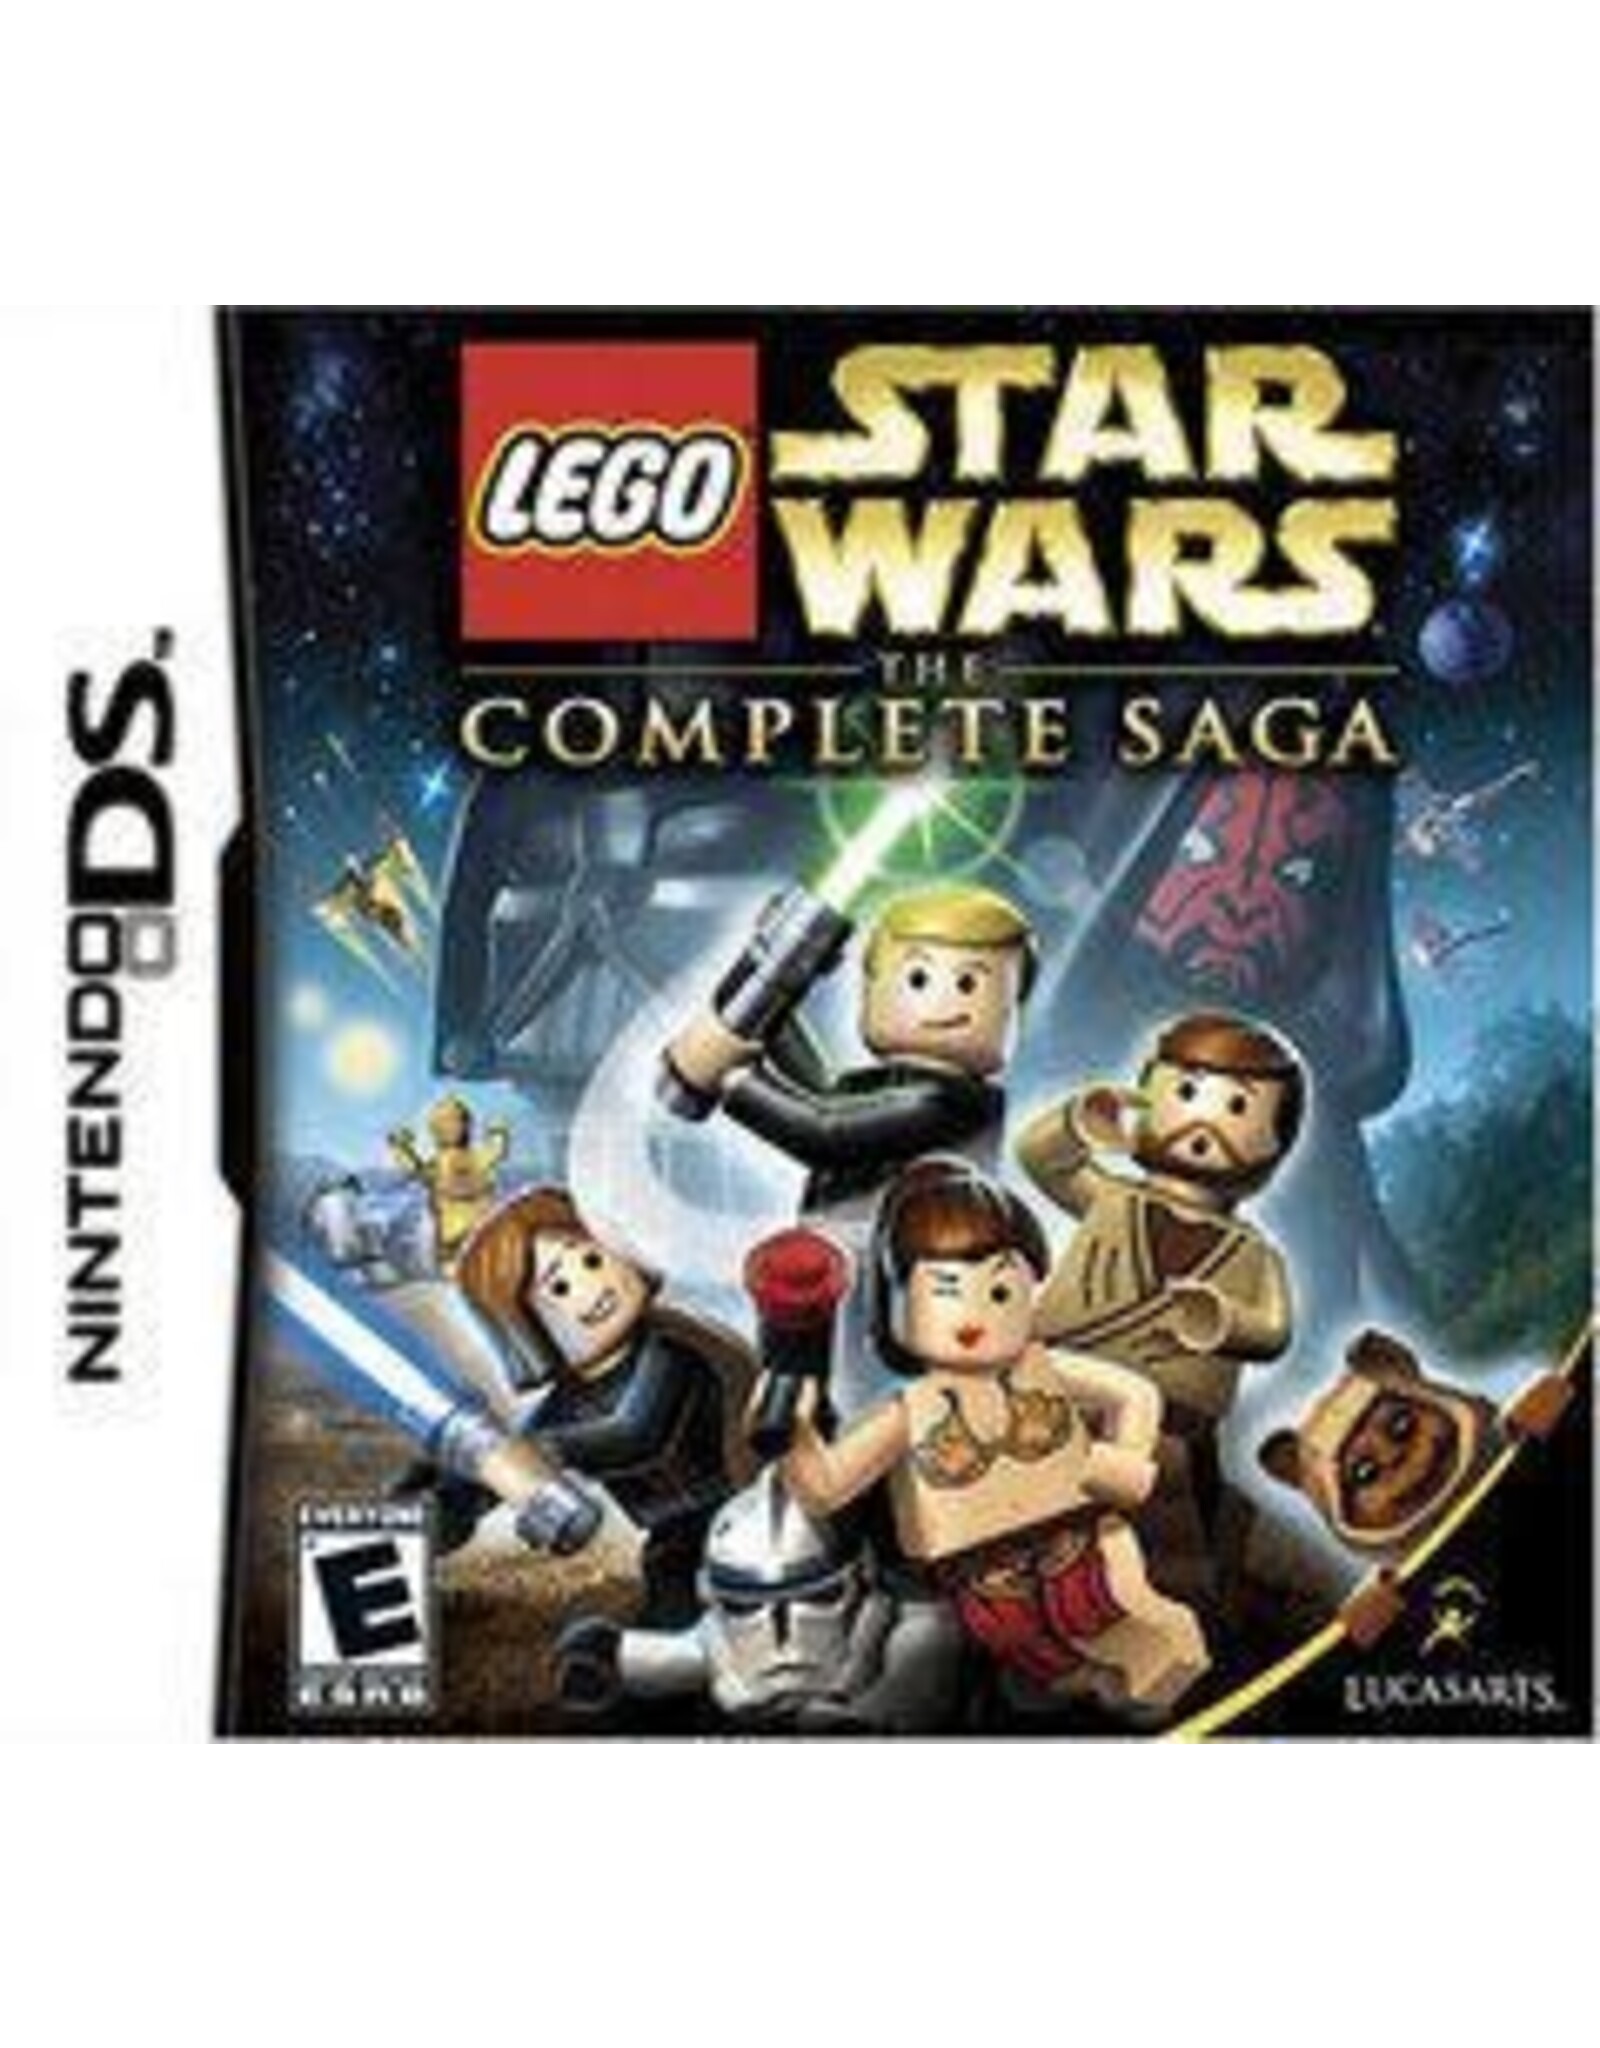 Nintendo DS LEGO Star Wars Complete Saga (CiB)